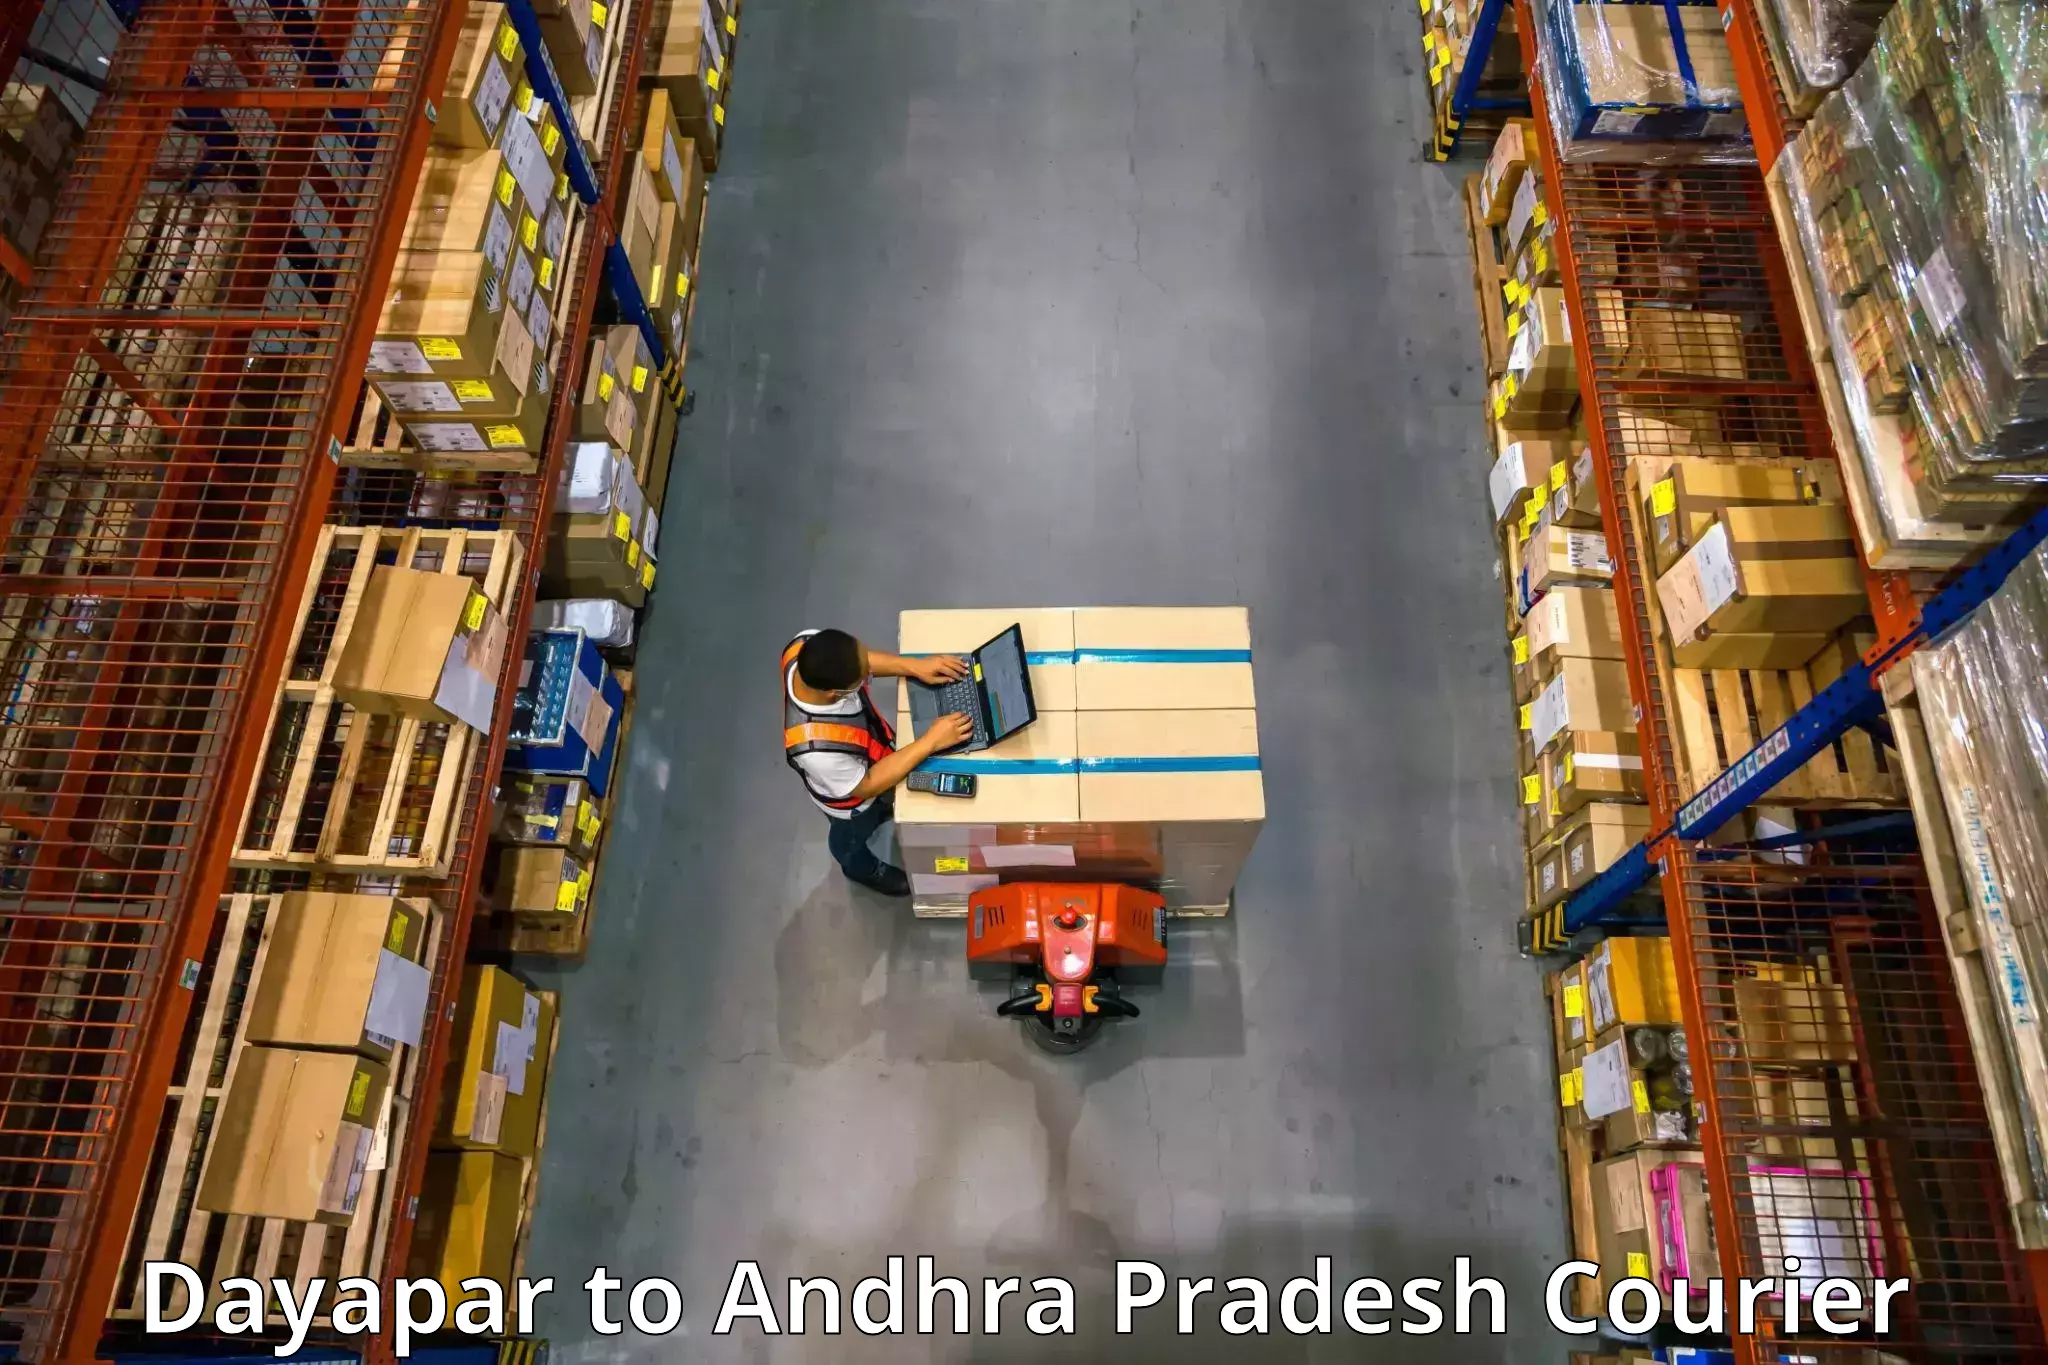 Furniture delivery service Dayapar to Andhra Pradesh